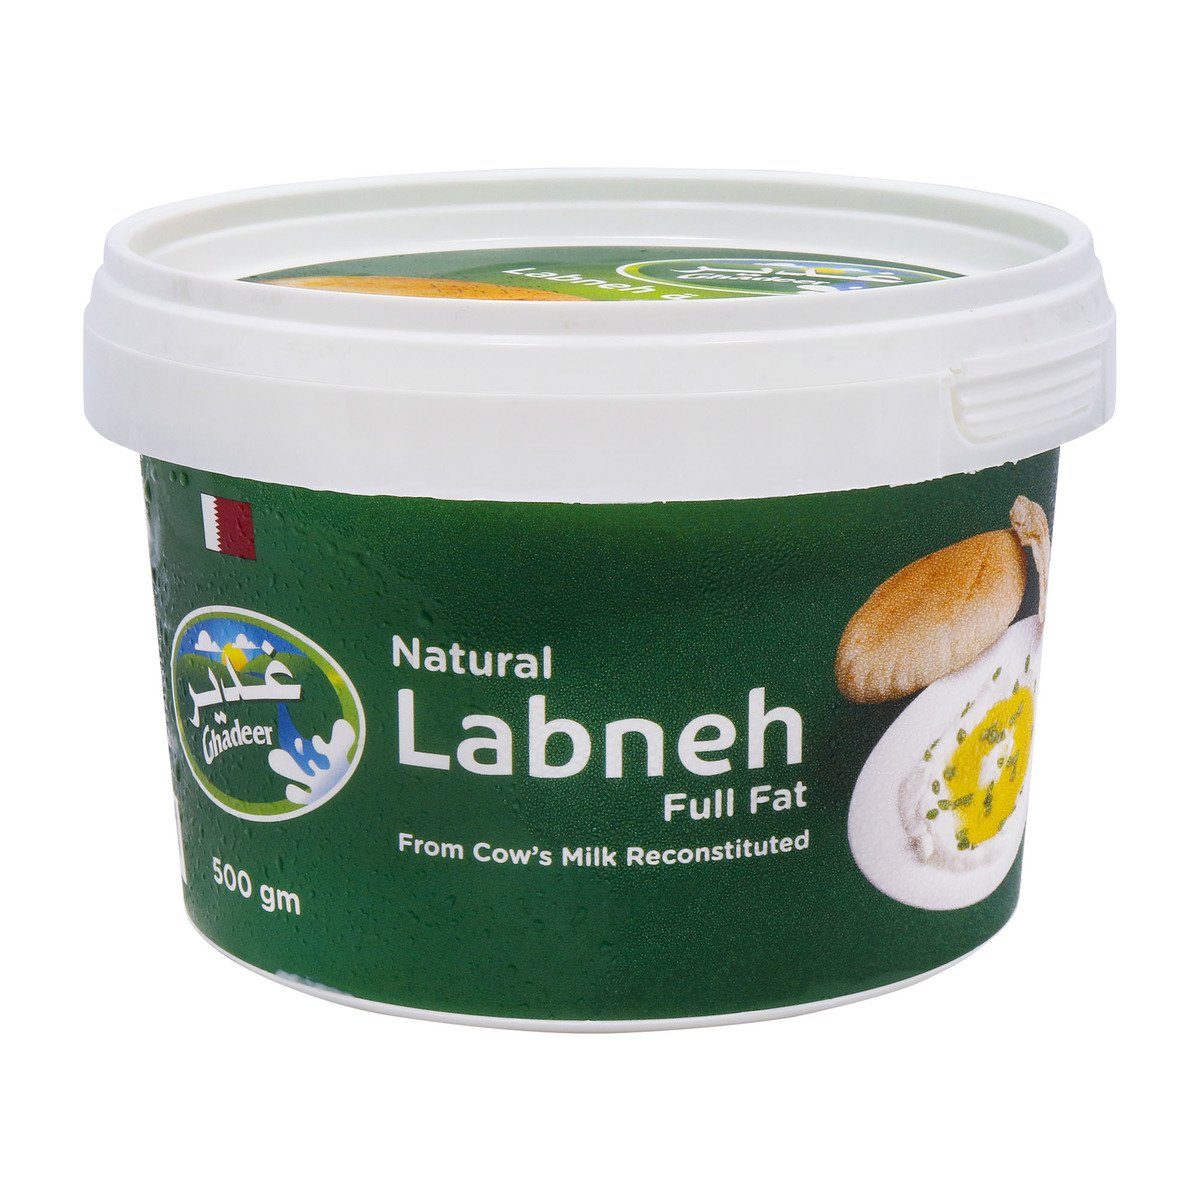 Ghadeer Natural Labneh Full Fat 500g